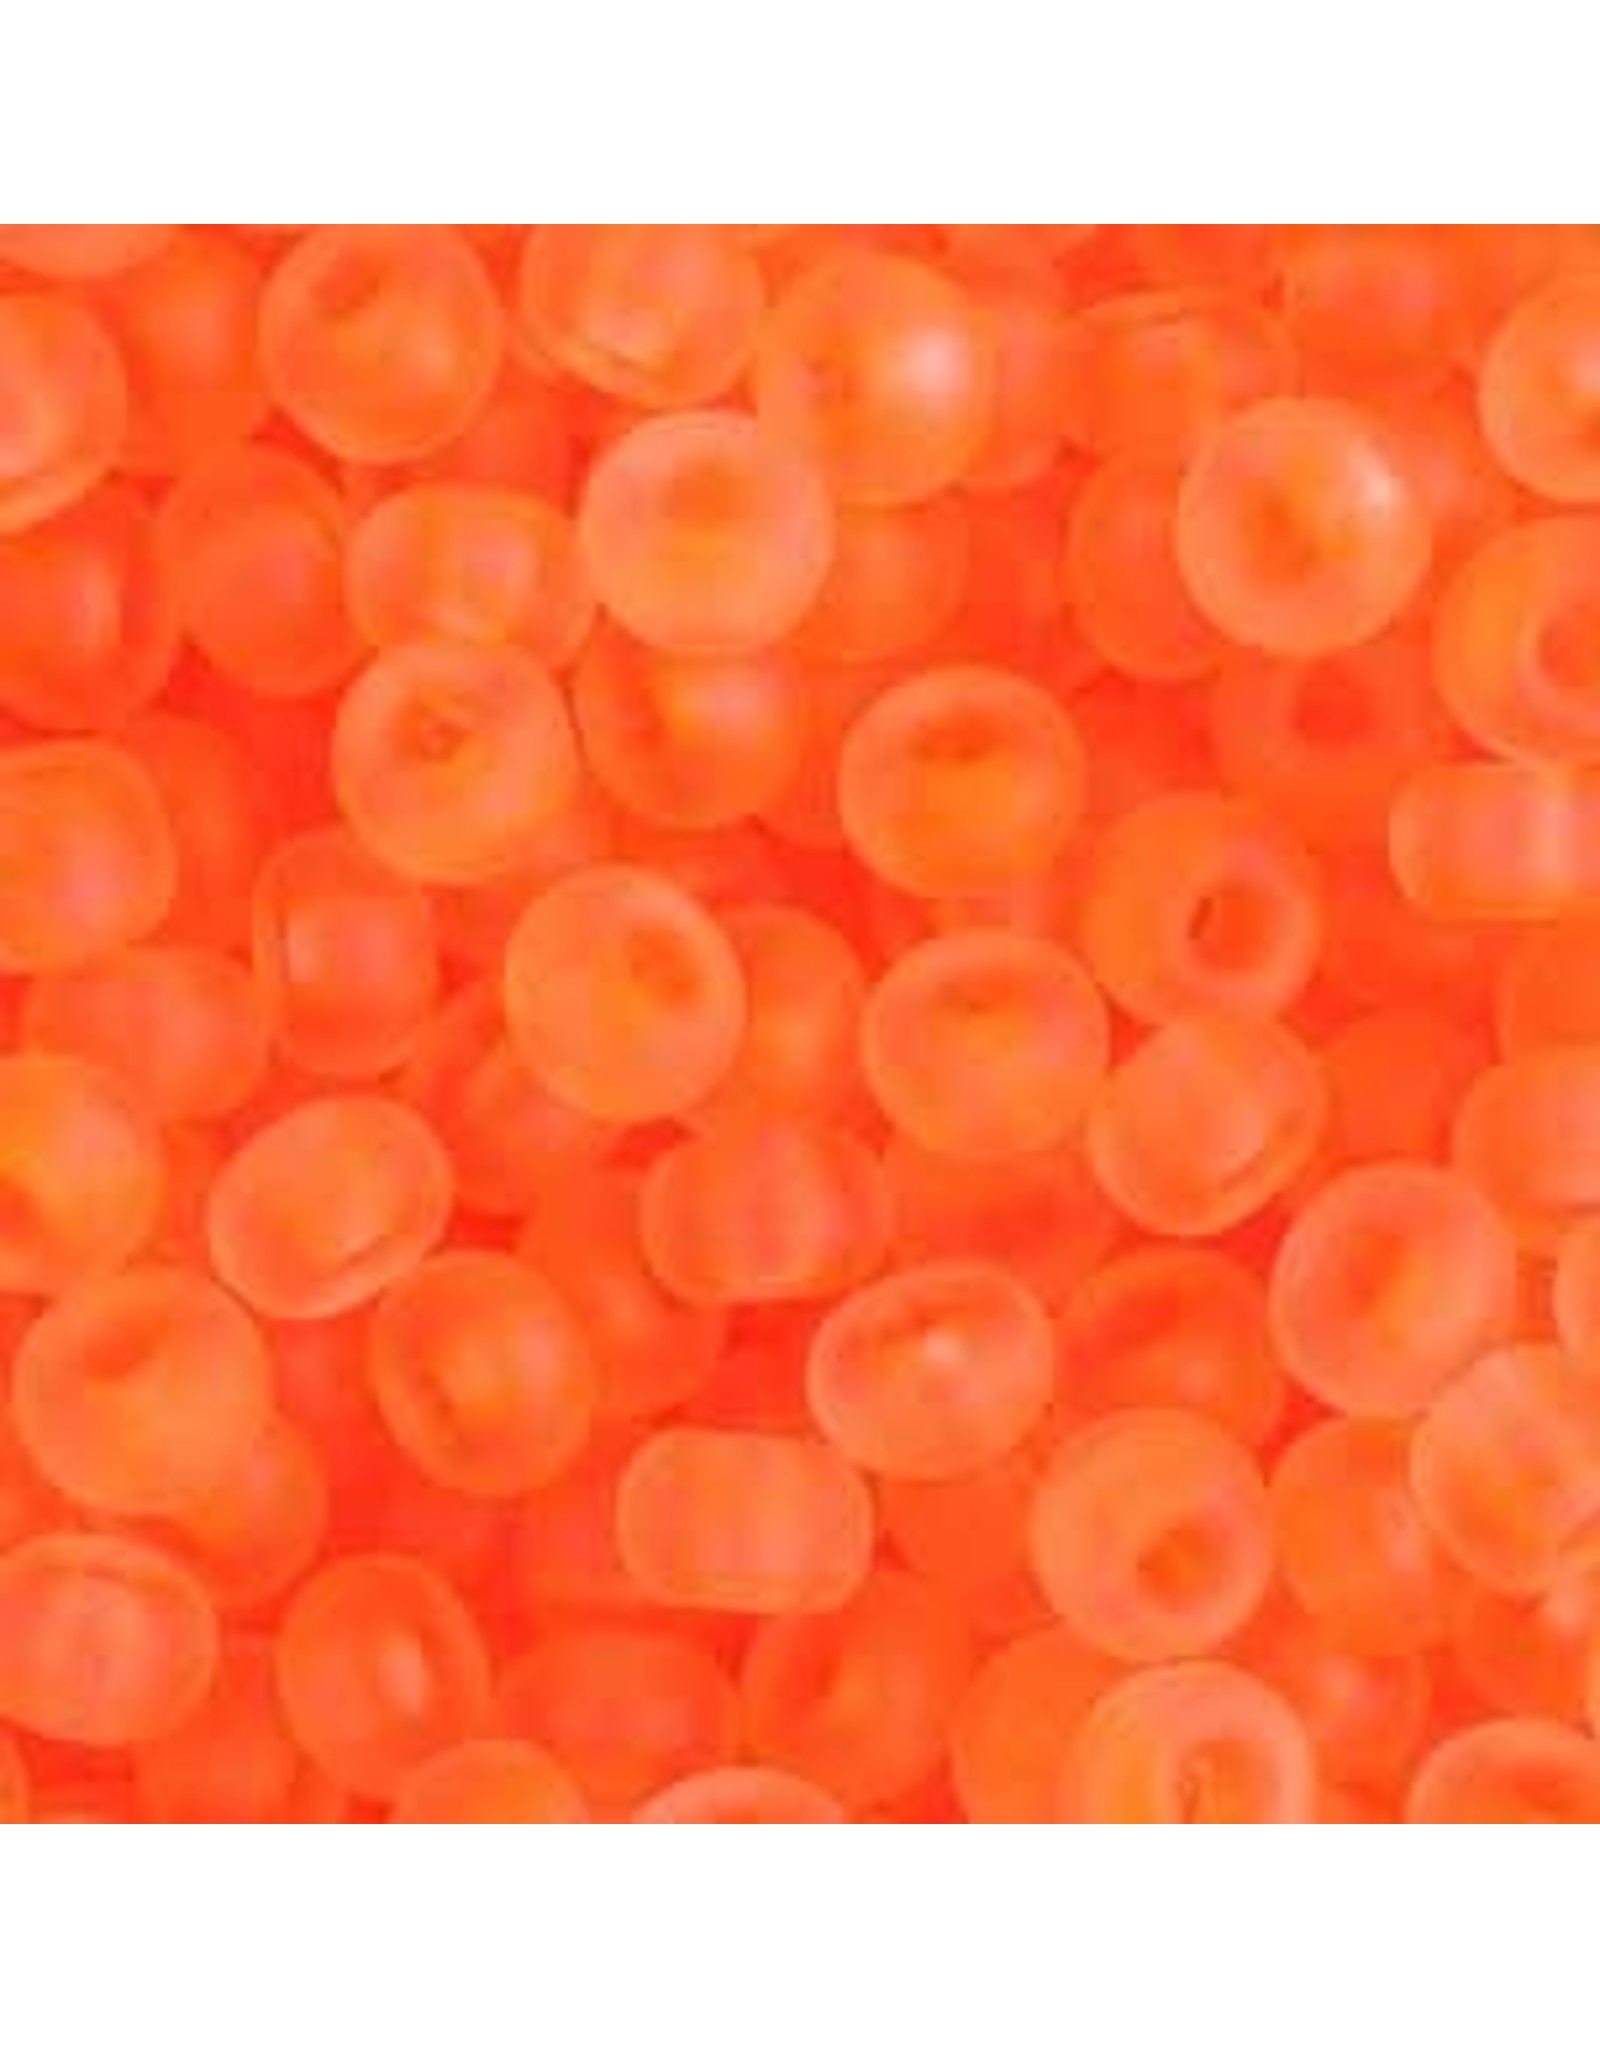 Czech *443107 6  Seed 10g  Transparent Neon Orange Matte